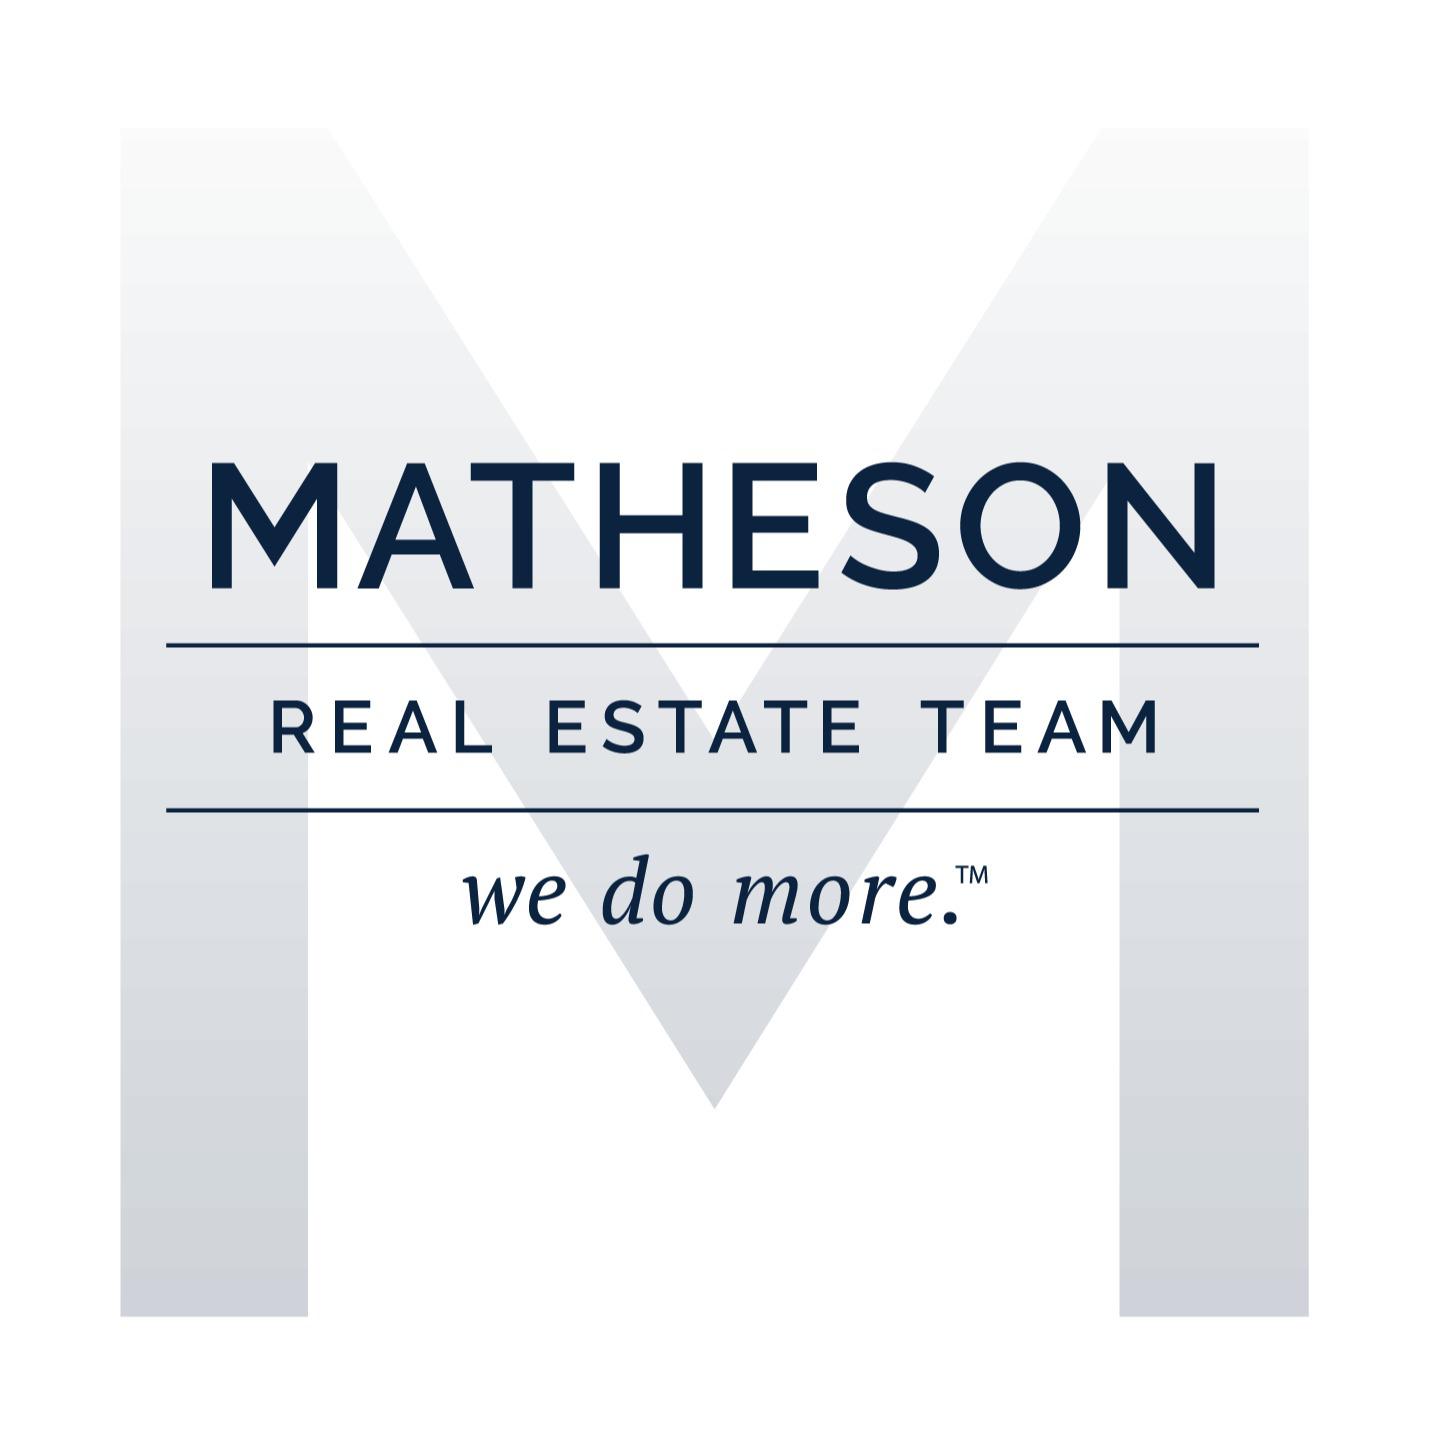 Matheson Real Estate Team - Scottsdale, AZ 85255 - (602)694-3200 | ShowMeLocal.com